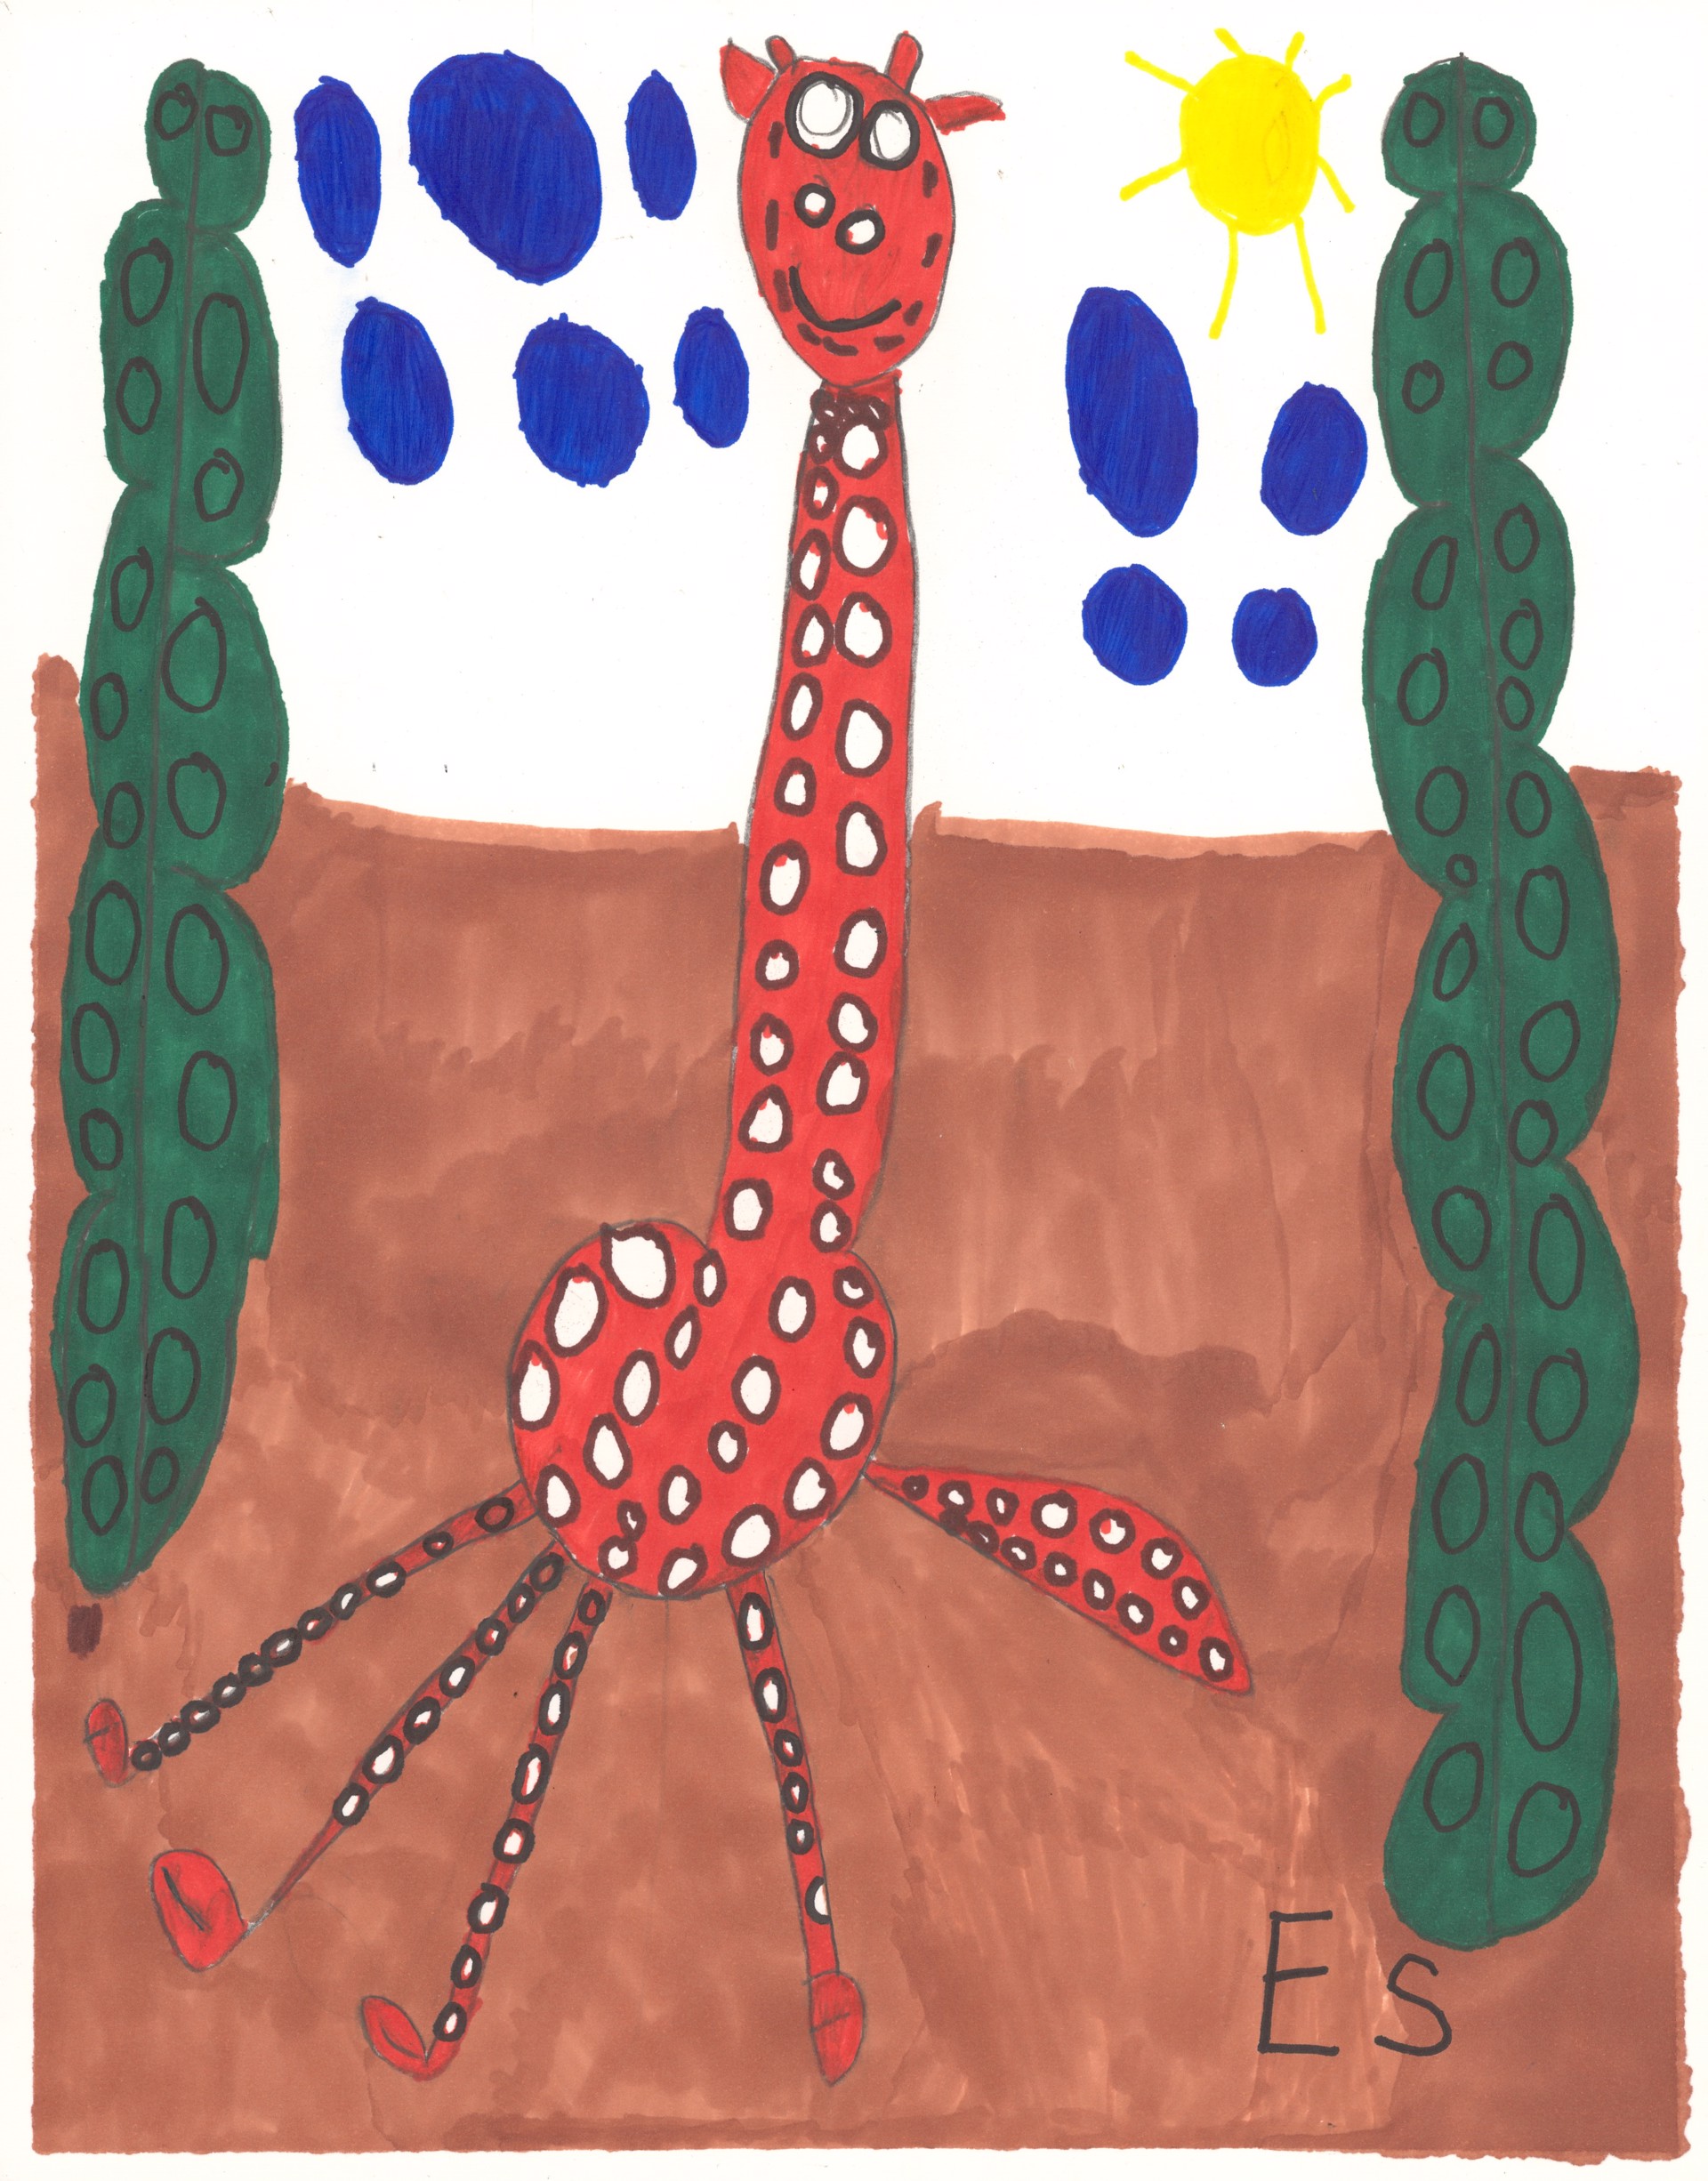 The Giraffe by Eileen Schofield